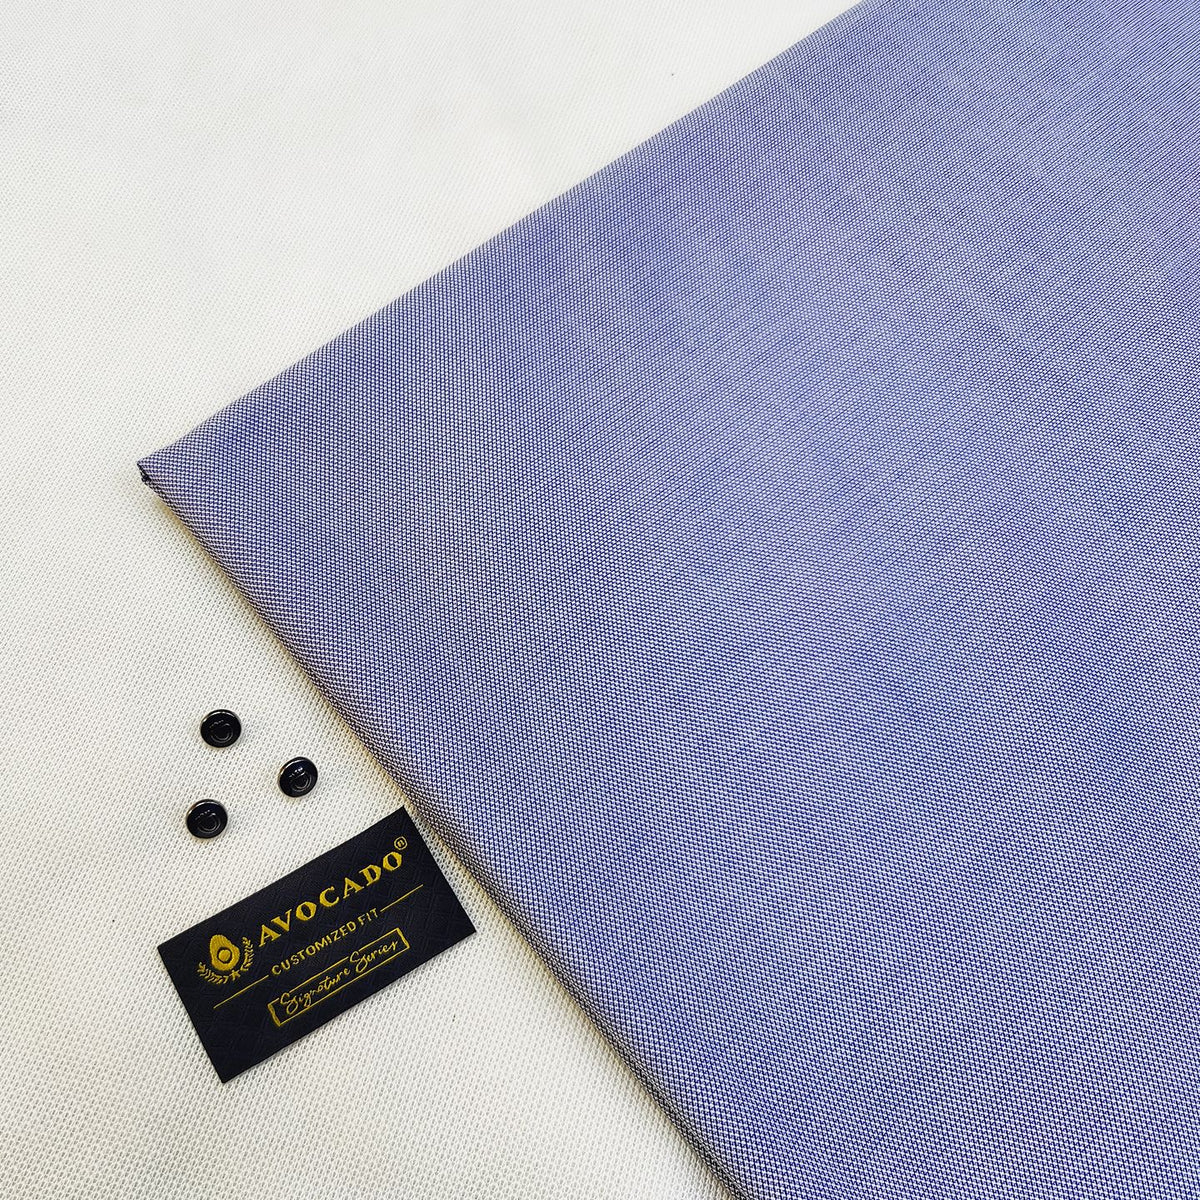 Navy Blue Texture kameez shalwar Fabric with Buttons & label